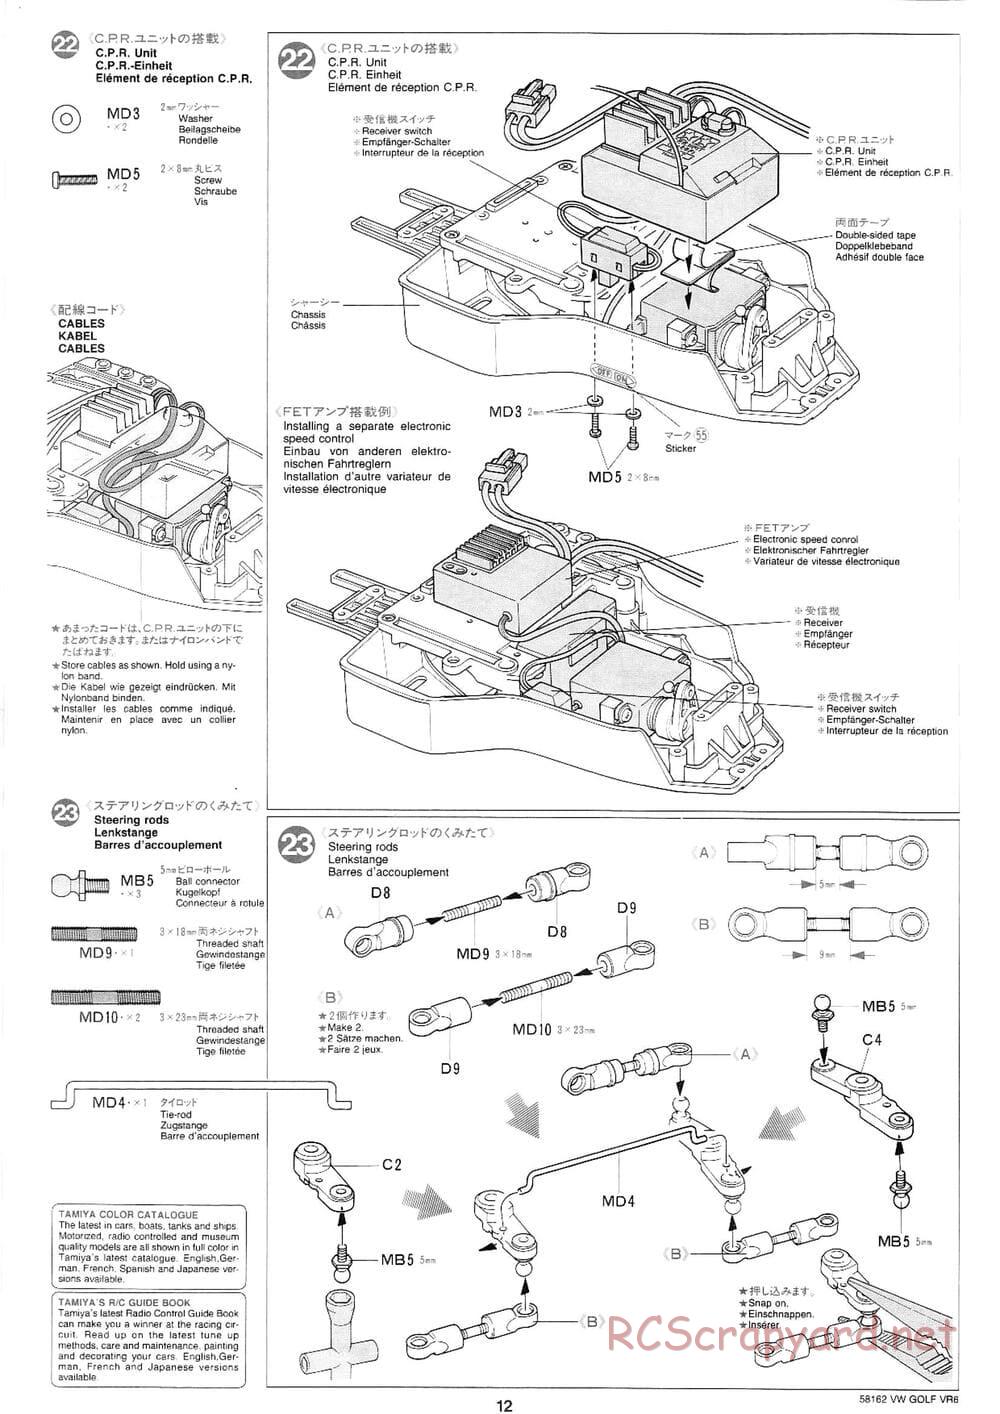 Tamiya - Volkswagen Golf VR6 - FF-01 Chassis - Manual - Page 12